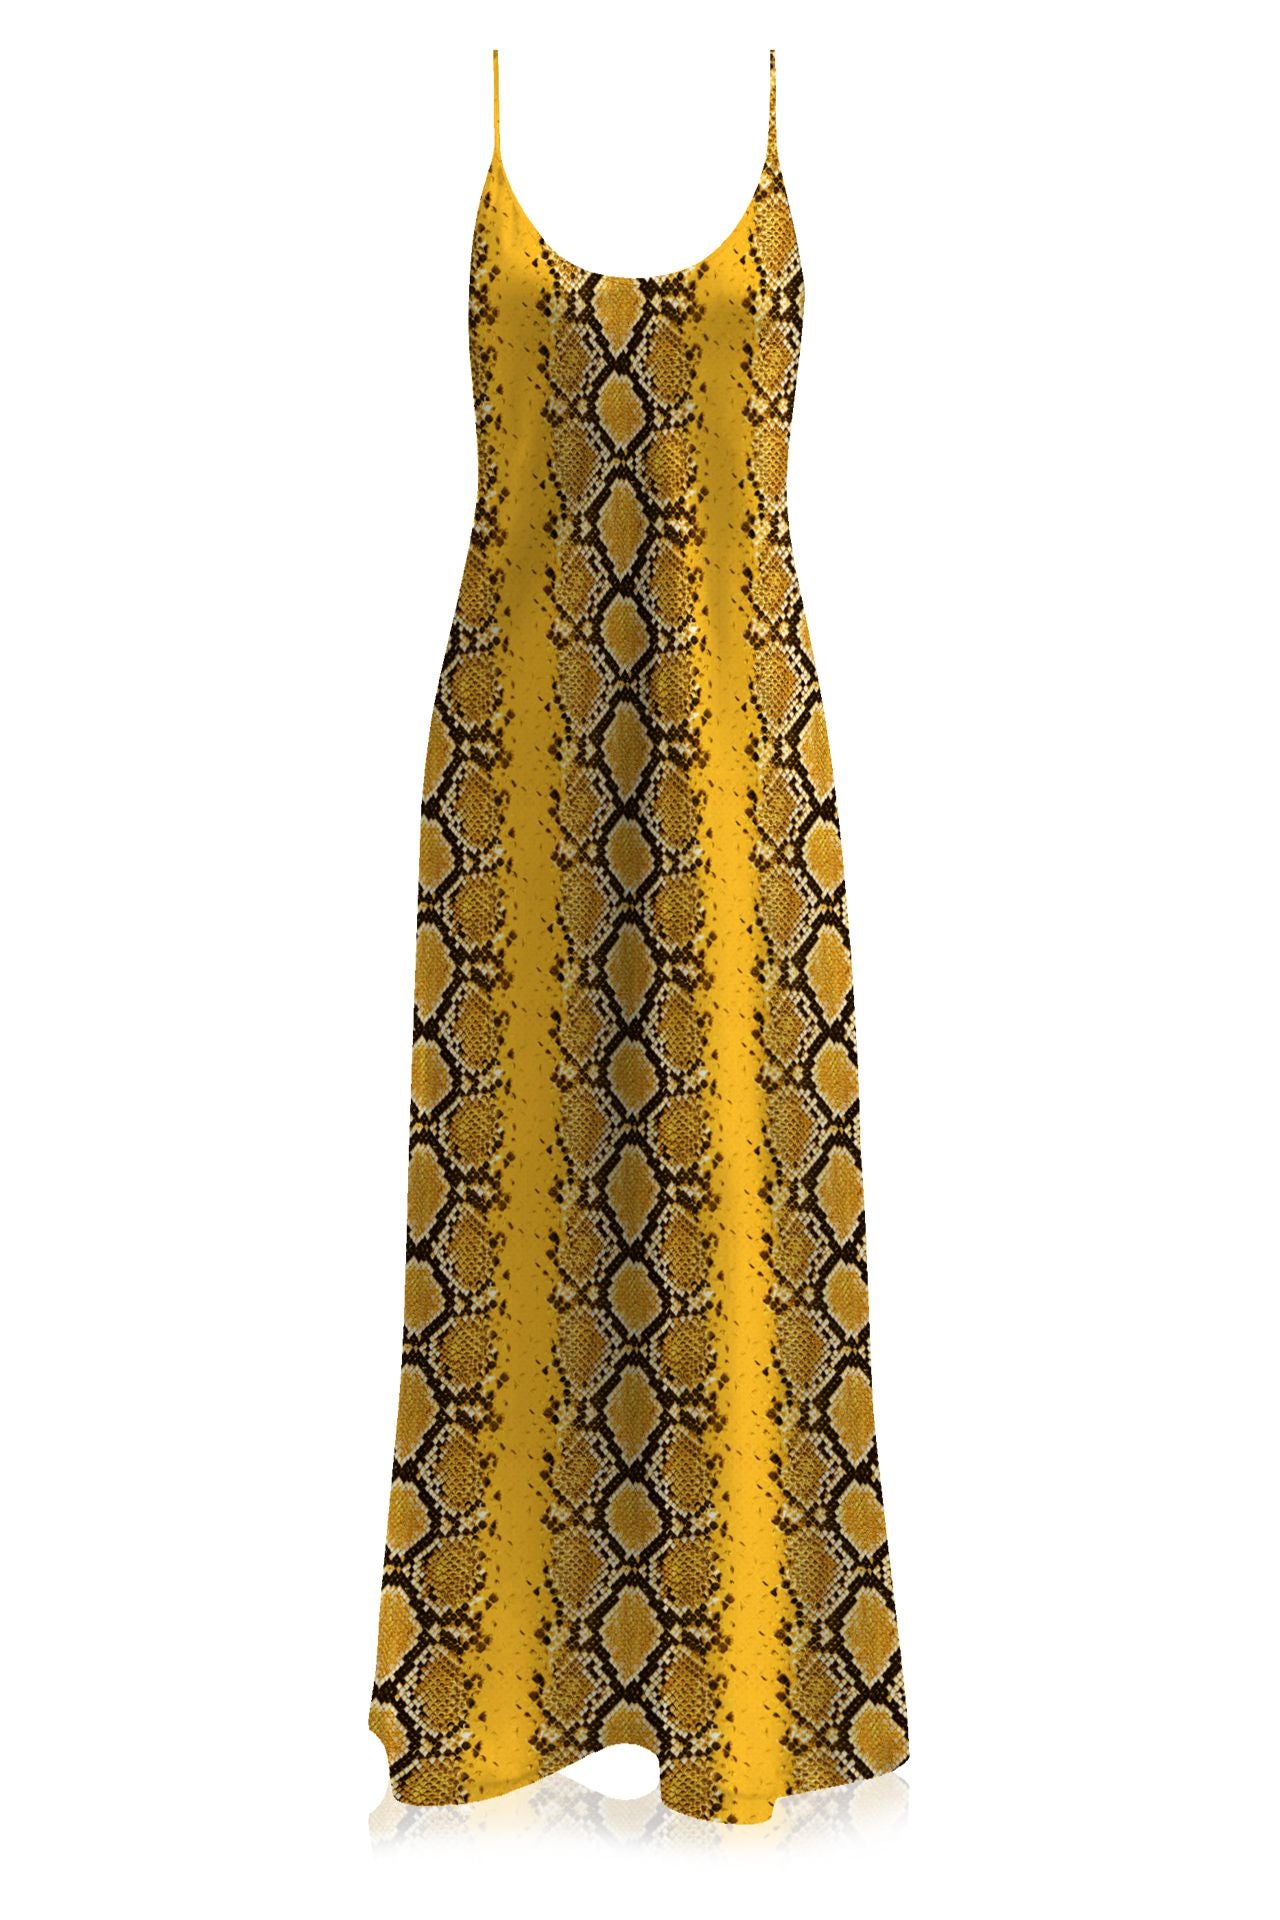 Cupro vegan silk gown cami dress slip in golden cob